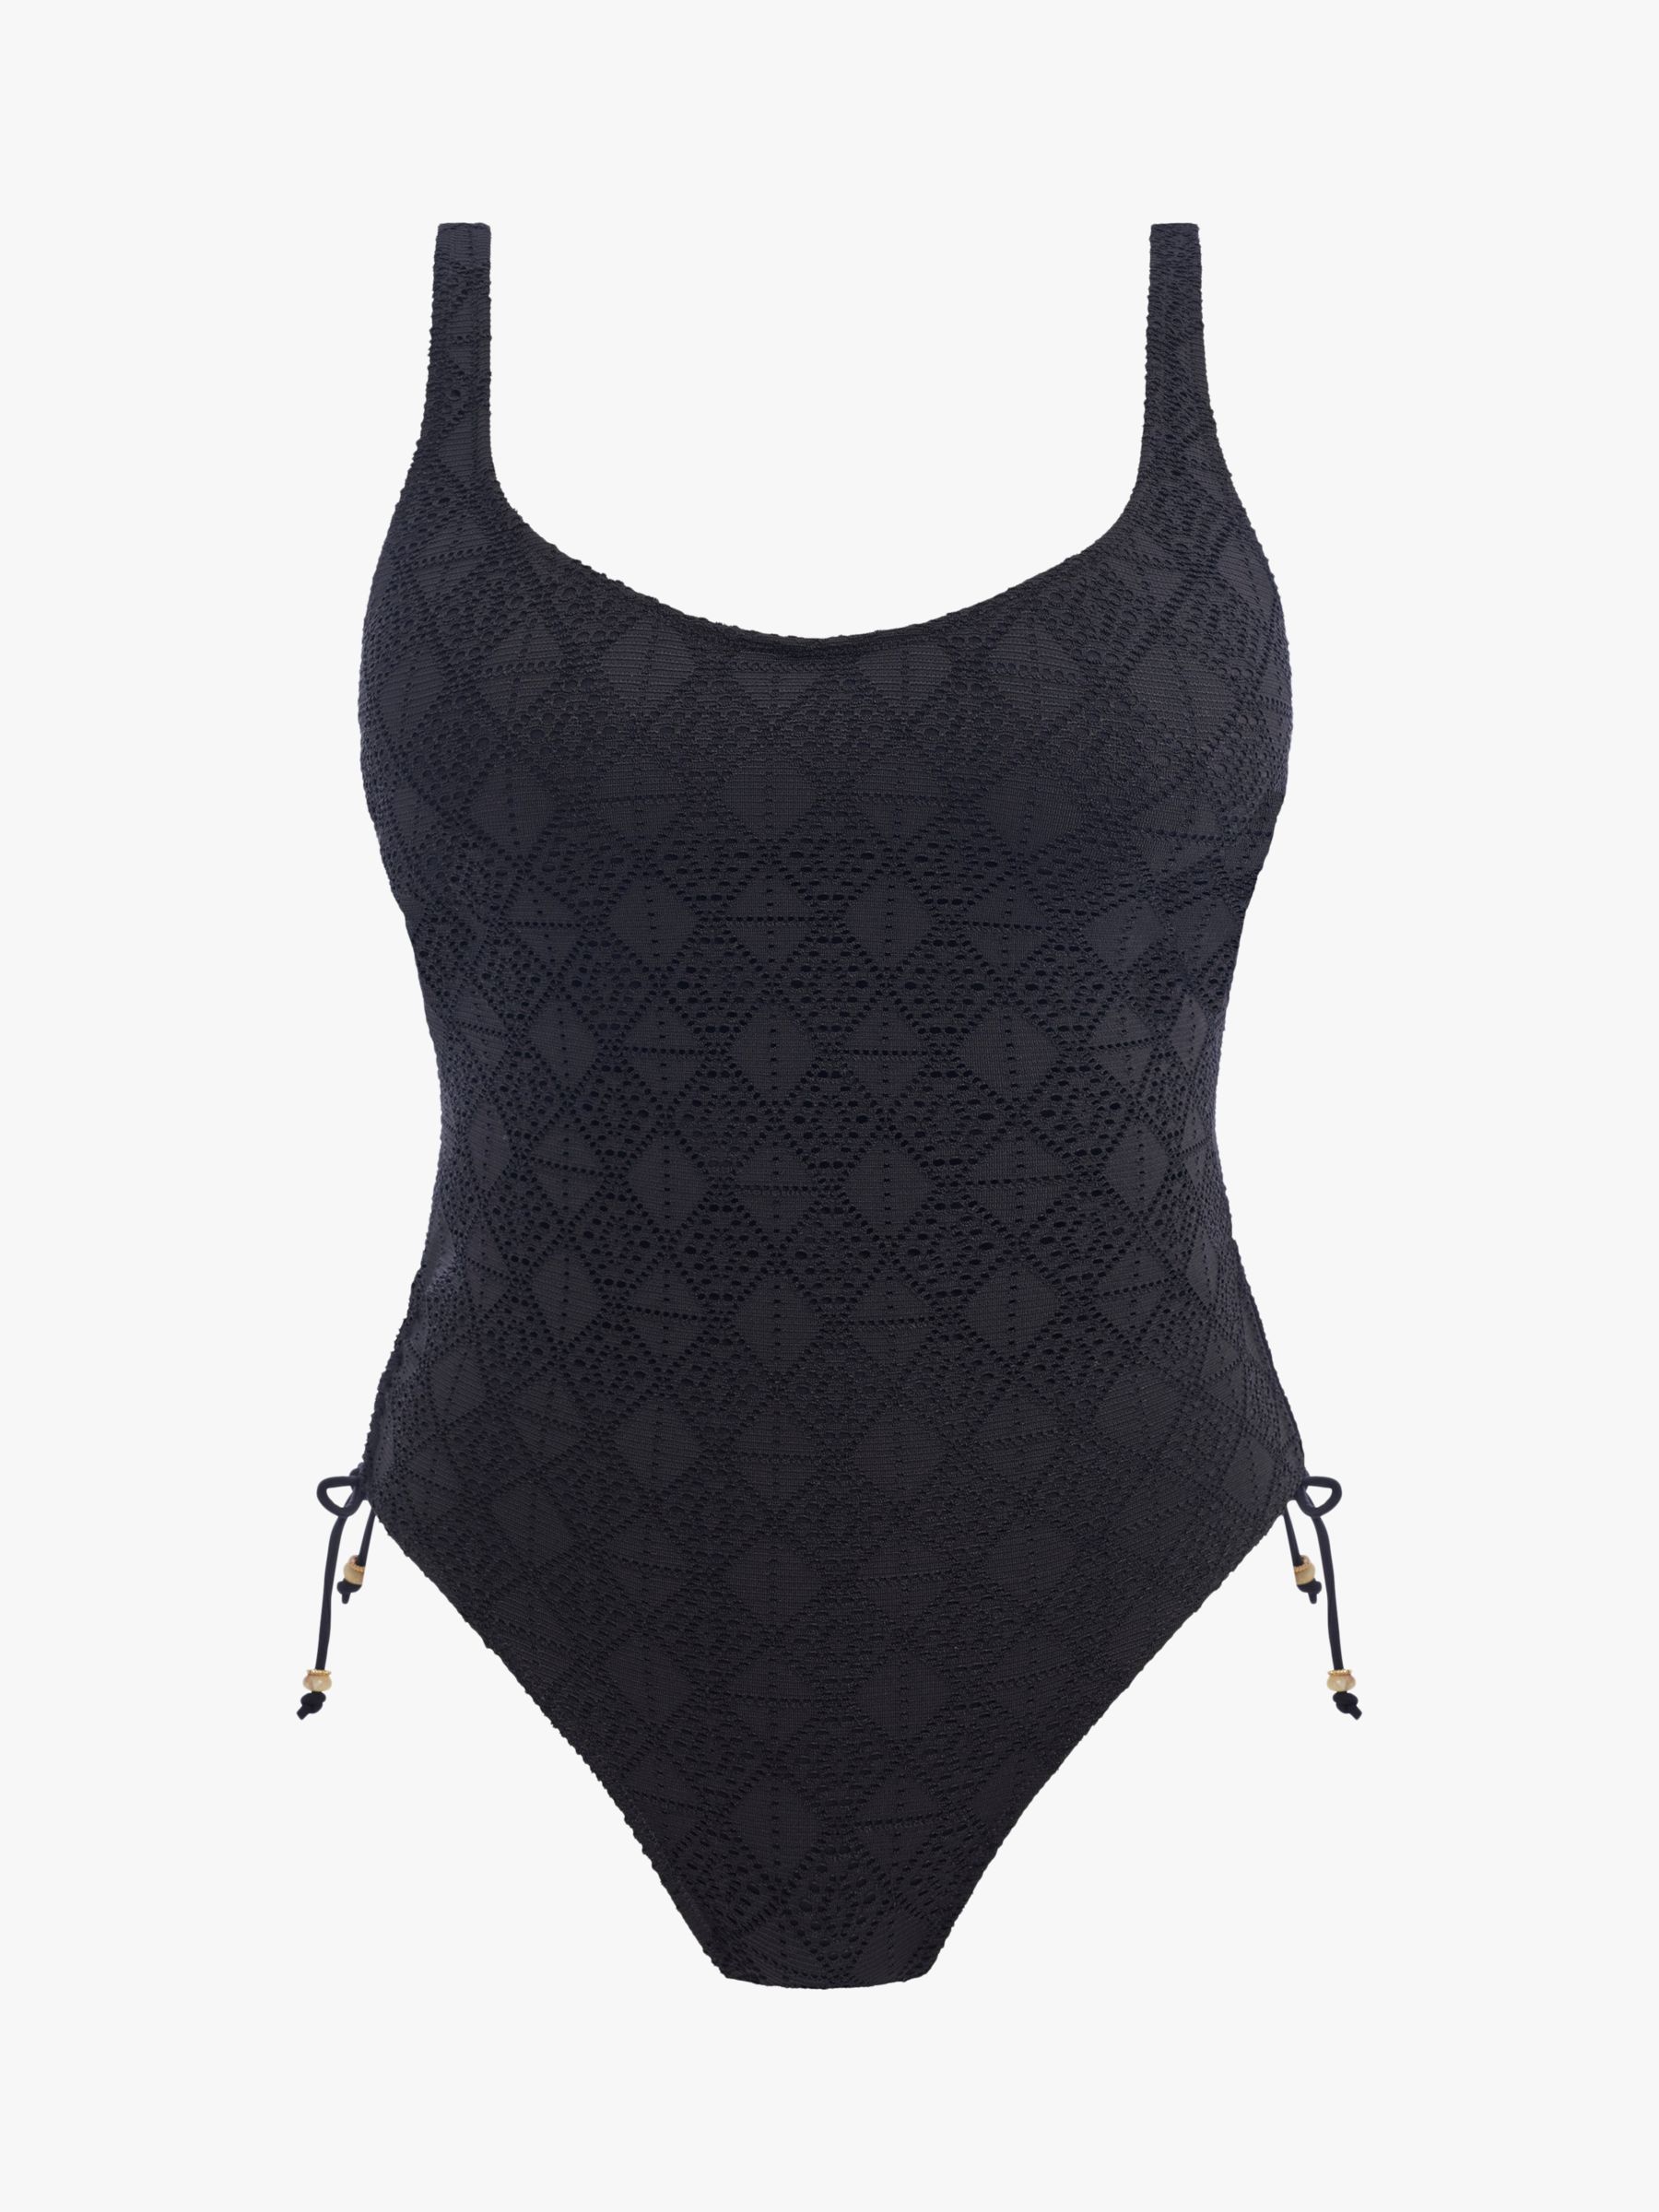 Freya Nomad Nights Crochet Underwired Swimsuit, Black, 34DD